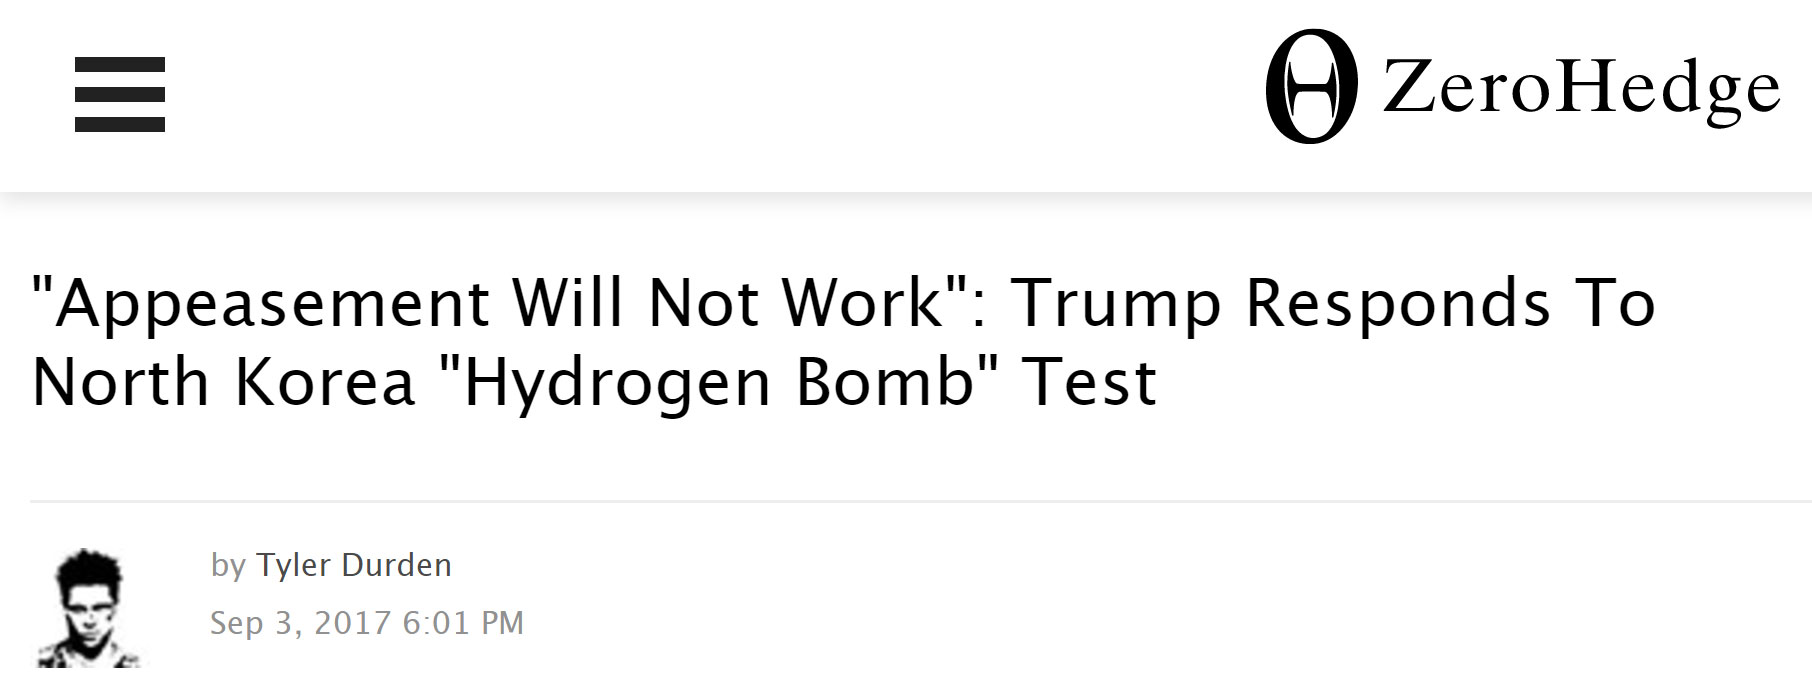 17-Appeasement-Will-Not-Work-Trump-Responds-To-North-Korea-Hydrogen-Bomb-Test.jpg